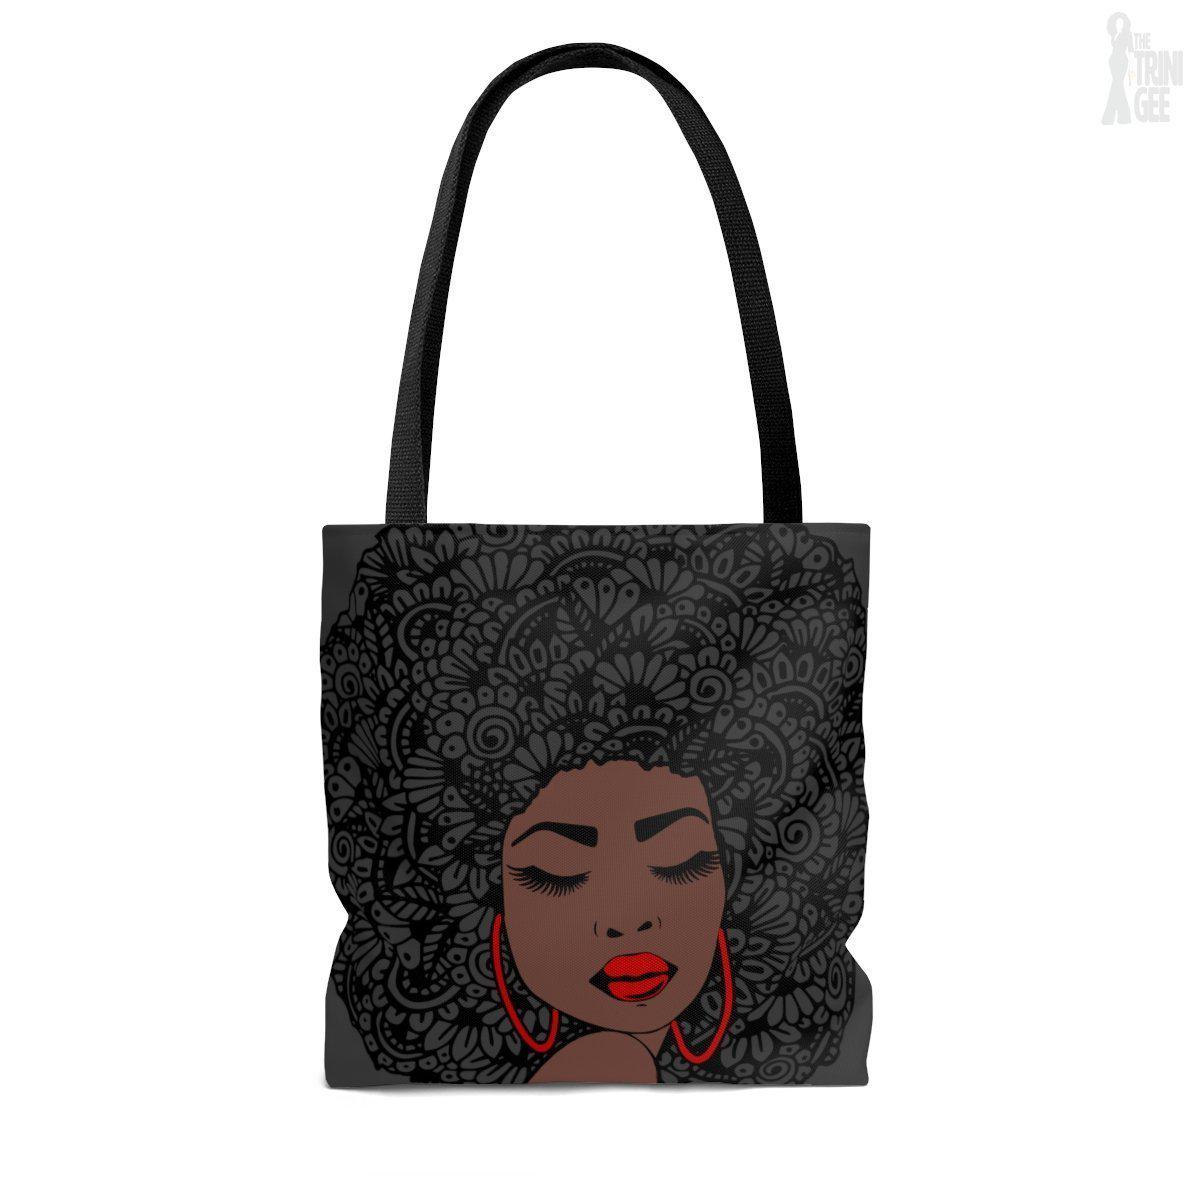 Afro Zentangle Tote Bag - The Trini Gee